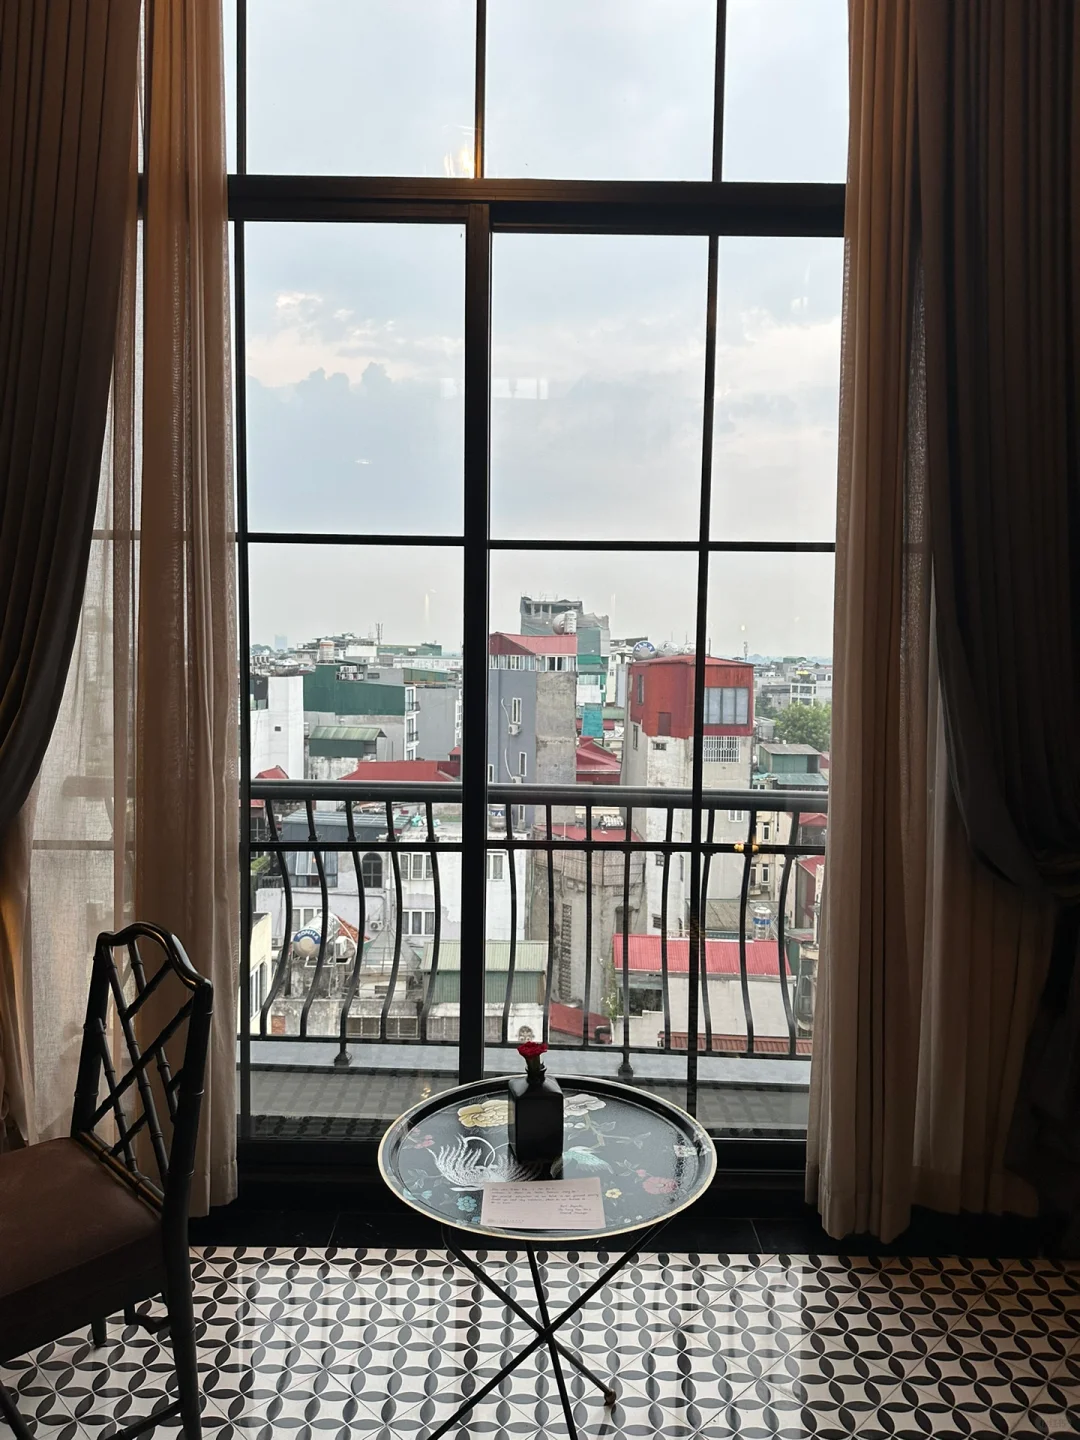 Hanoi-La Siesta Premium Hàng Be hotel, a master-style hotel in the city